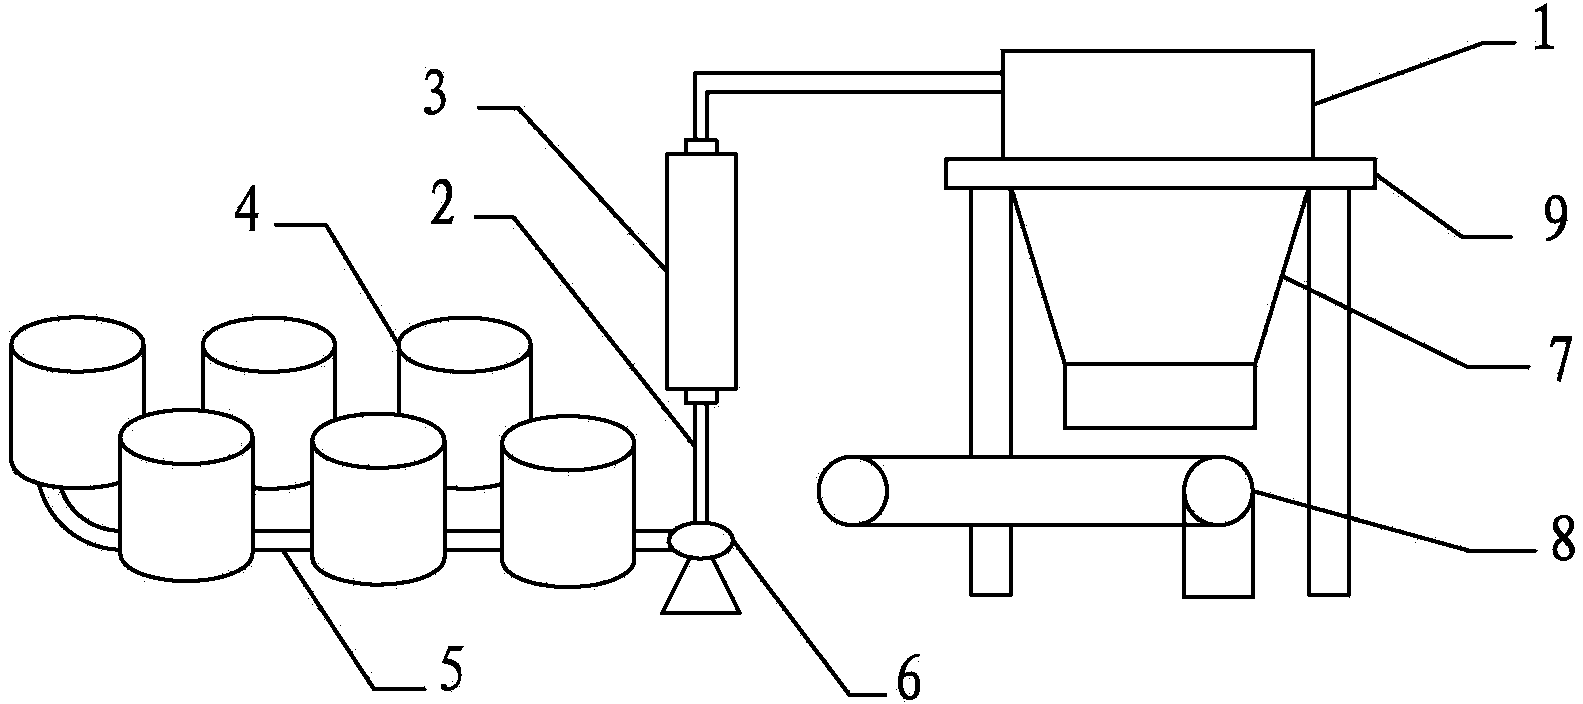 A filter press